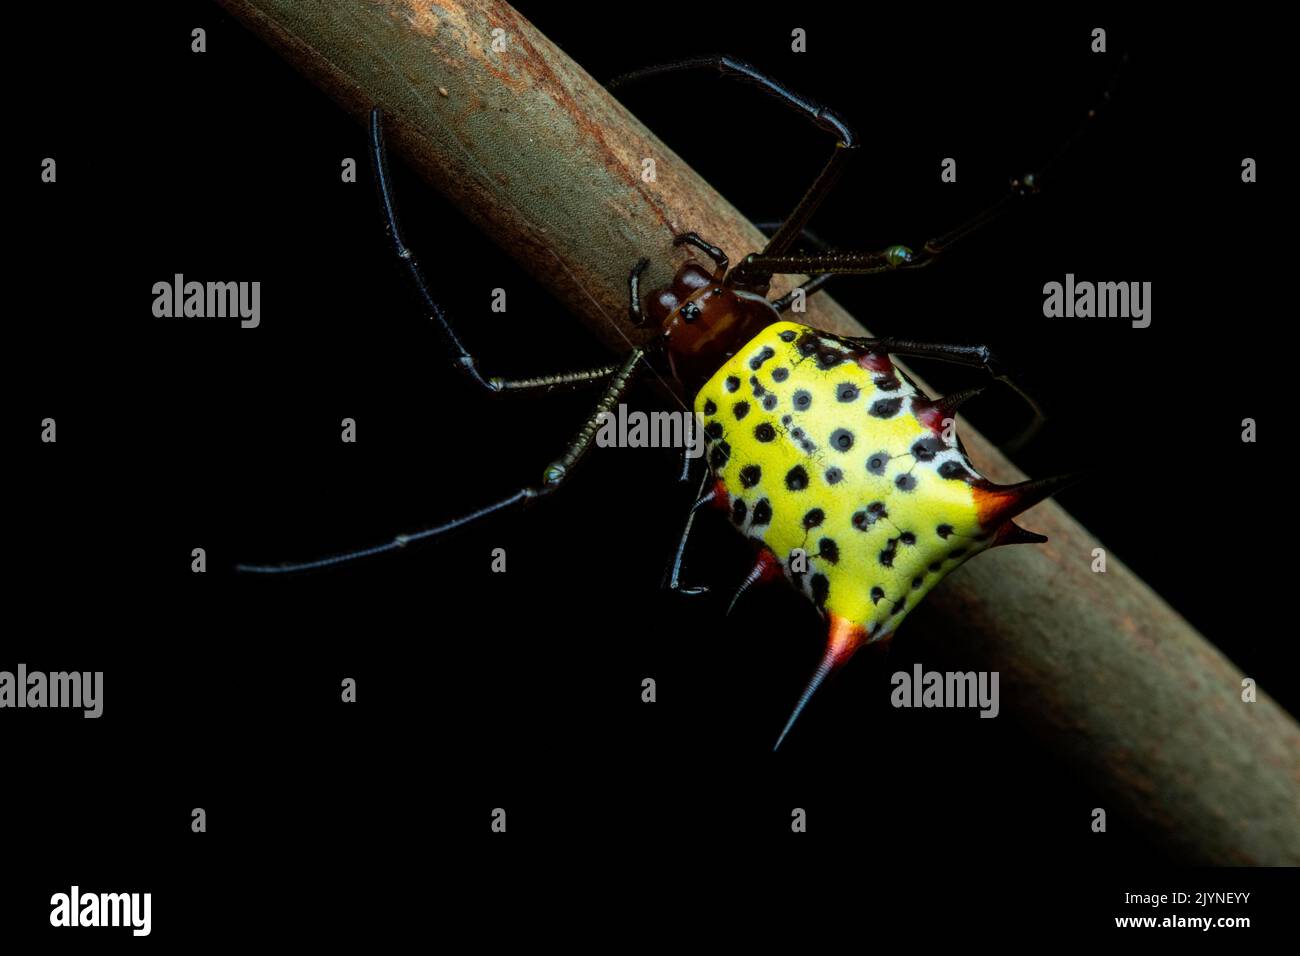 Spined micrathena (Micrathena gracilis) on a twig, Manzanillo, Costa Rica Stock Photo